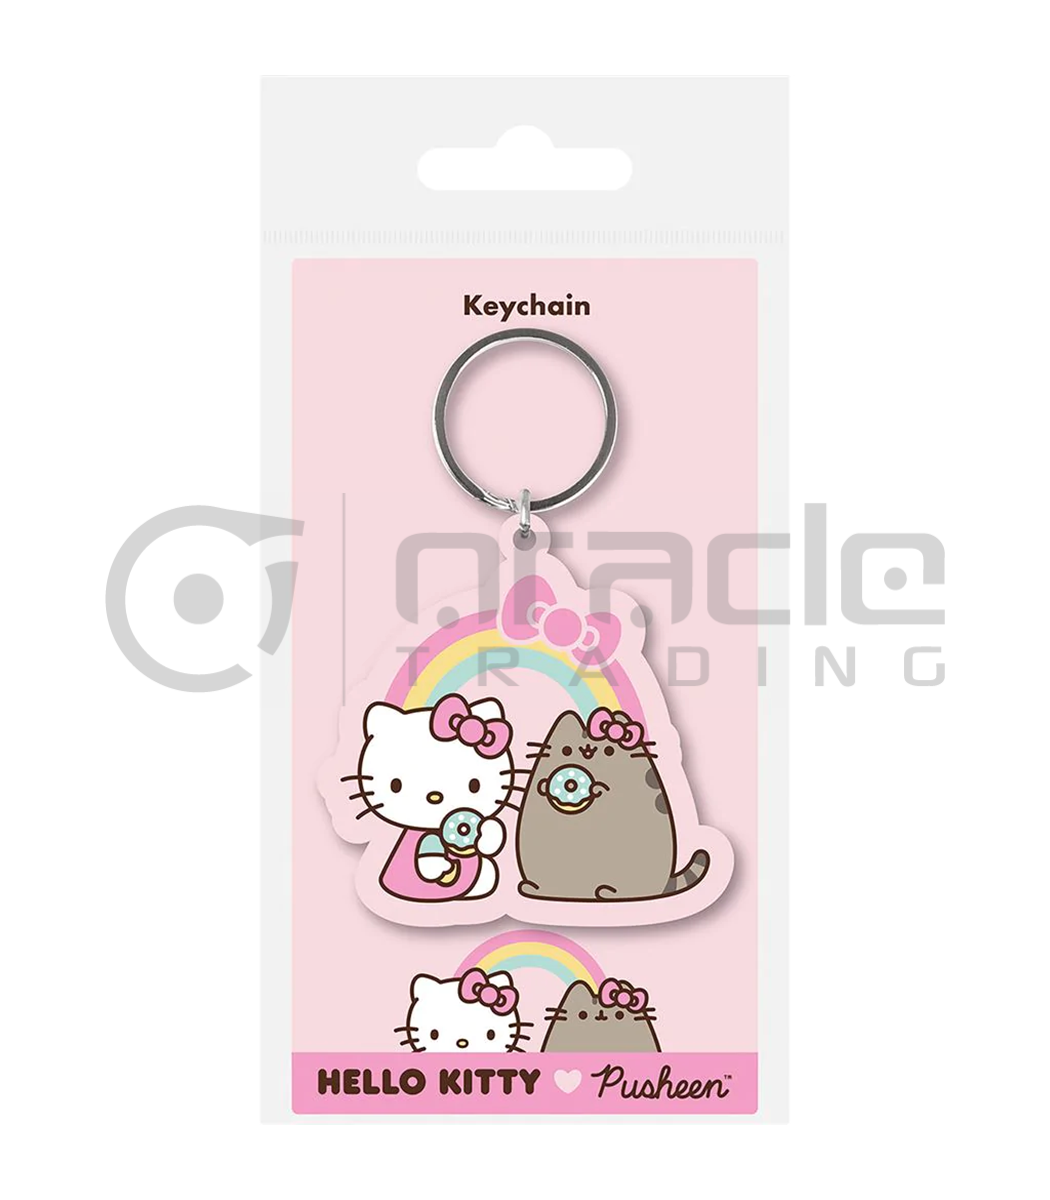 Hello Kitty x Pusheen Keychain - Treats